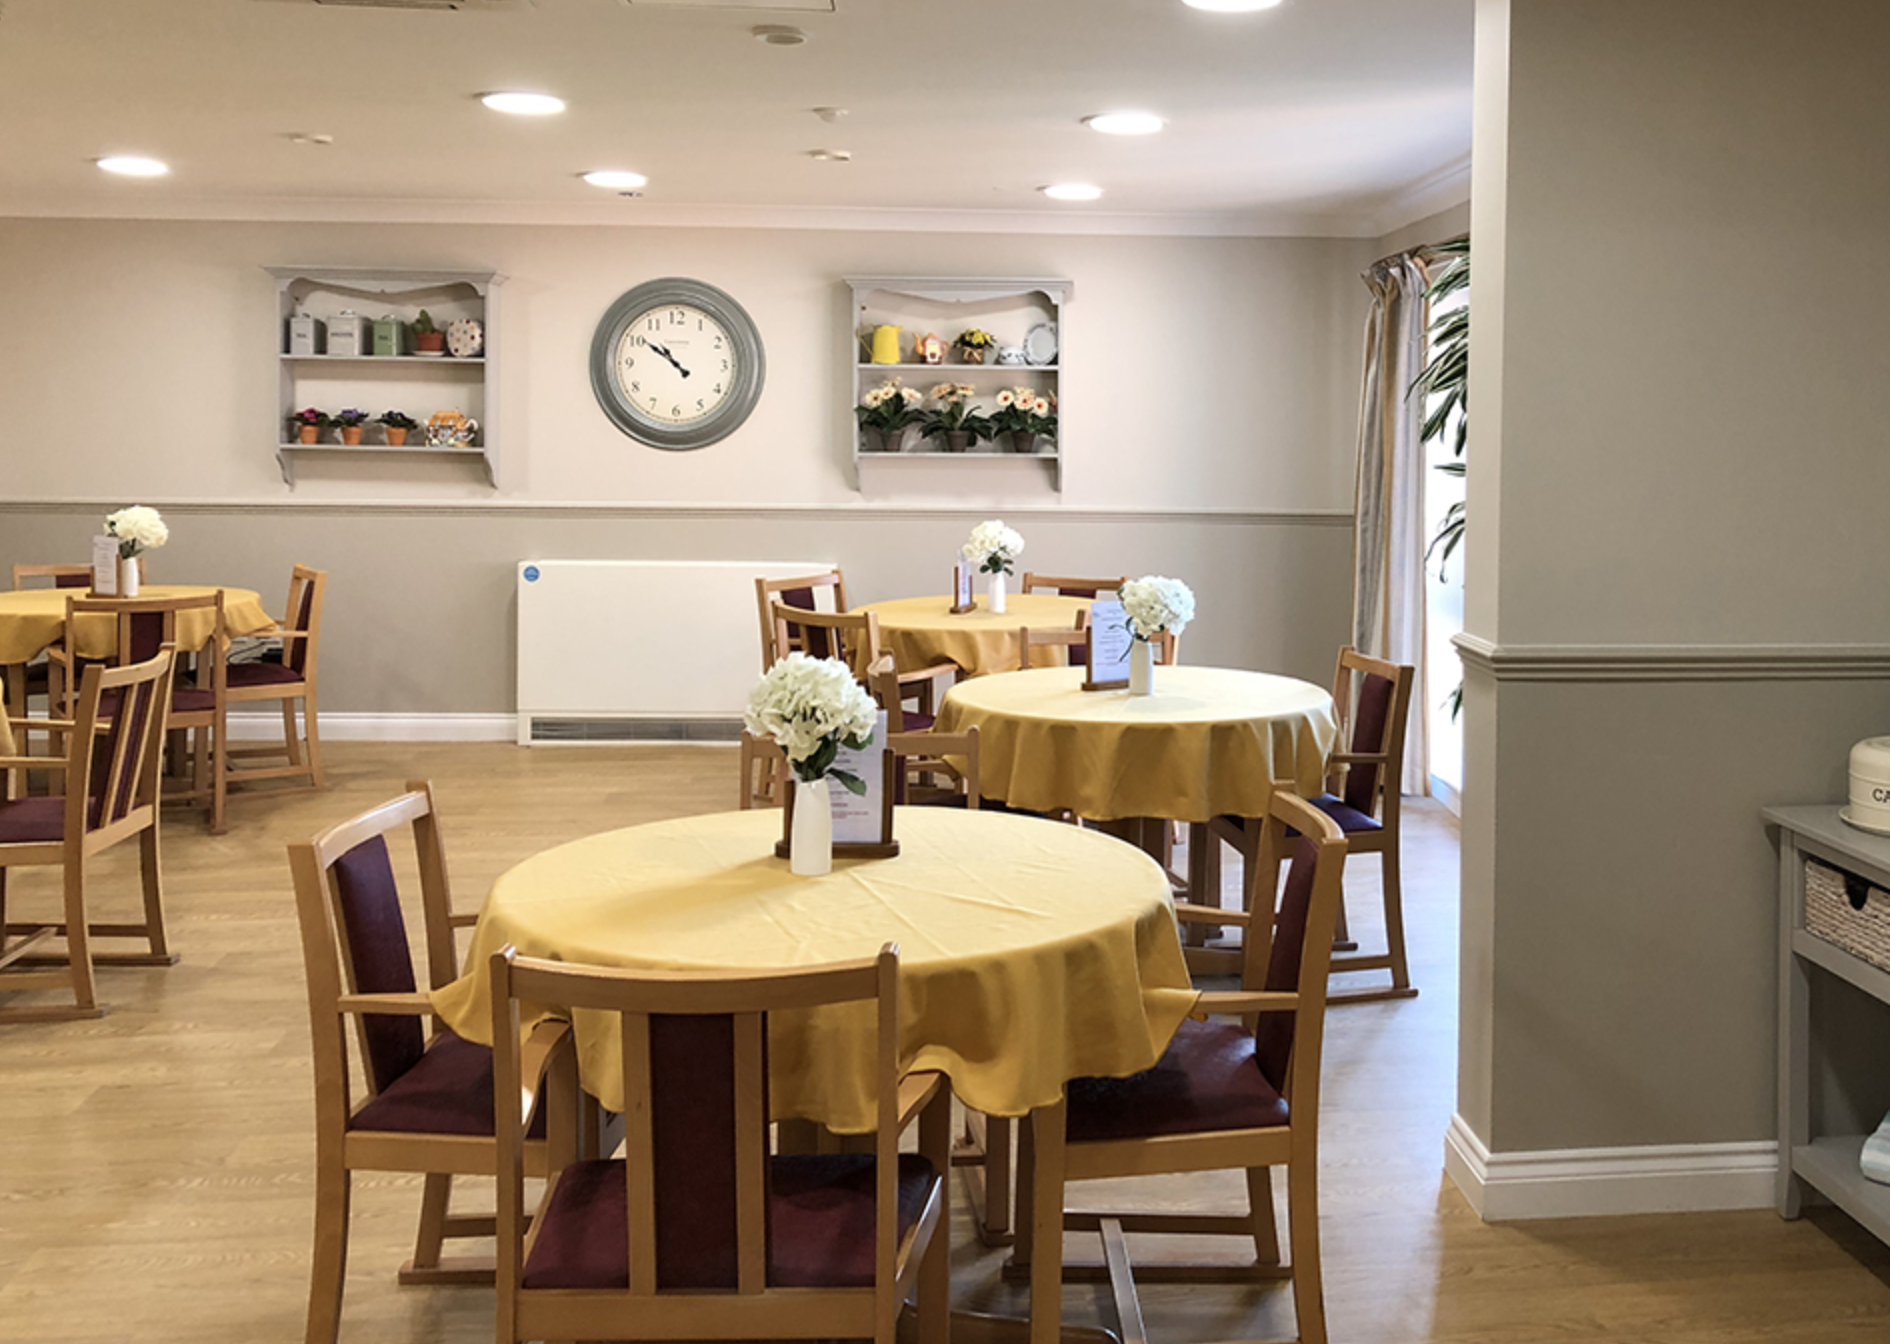 Dining room of Fern Brook Lodge care home in Gillingham, Dorset